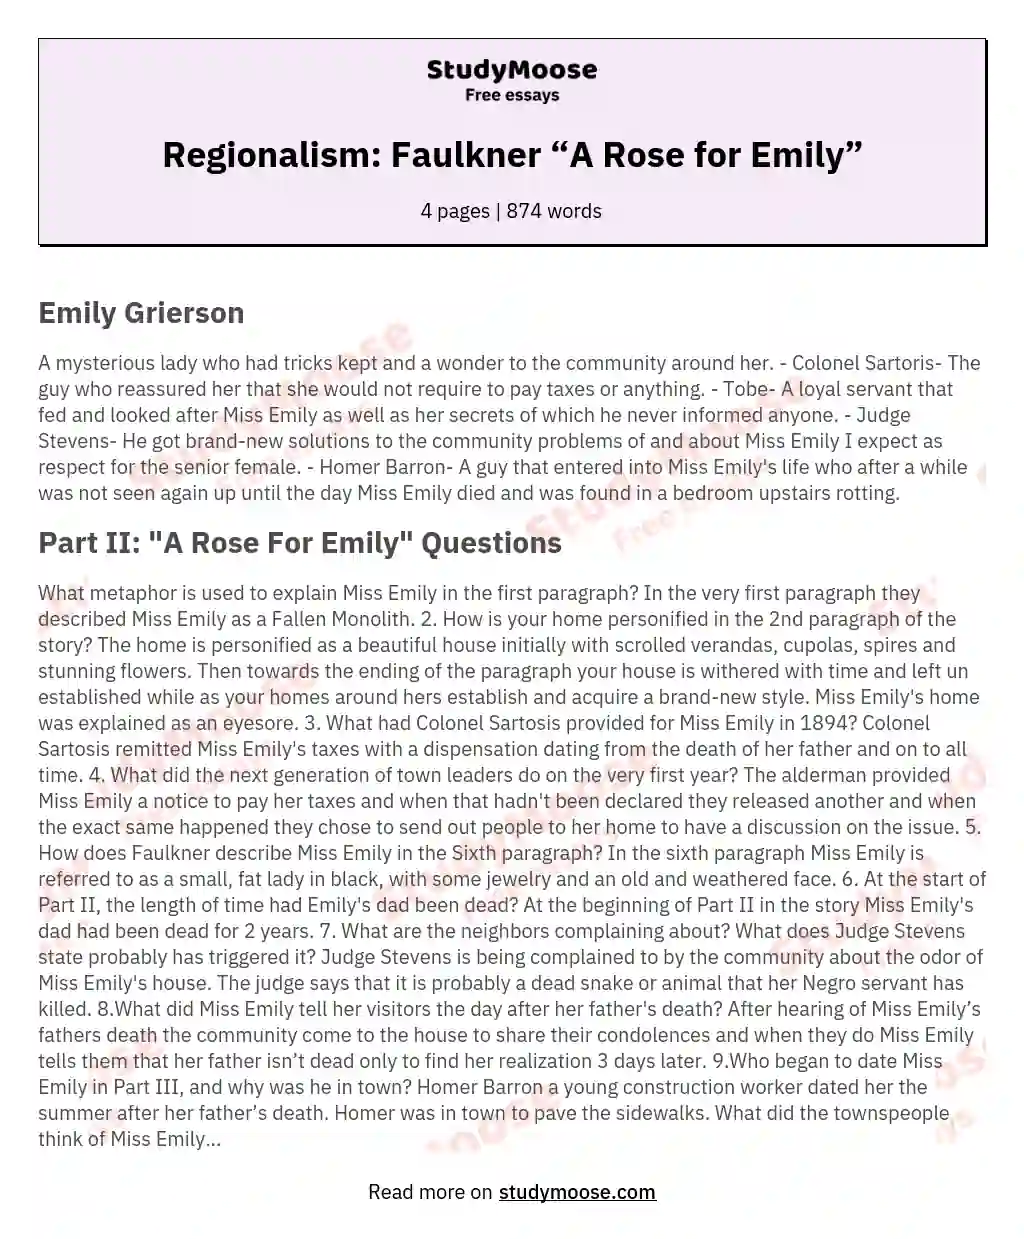 Regionalism: Faulkner “A Rose for Emily” essay